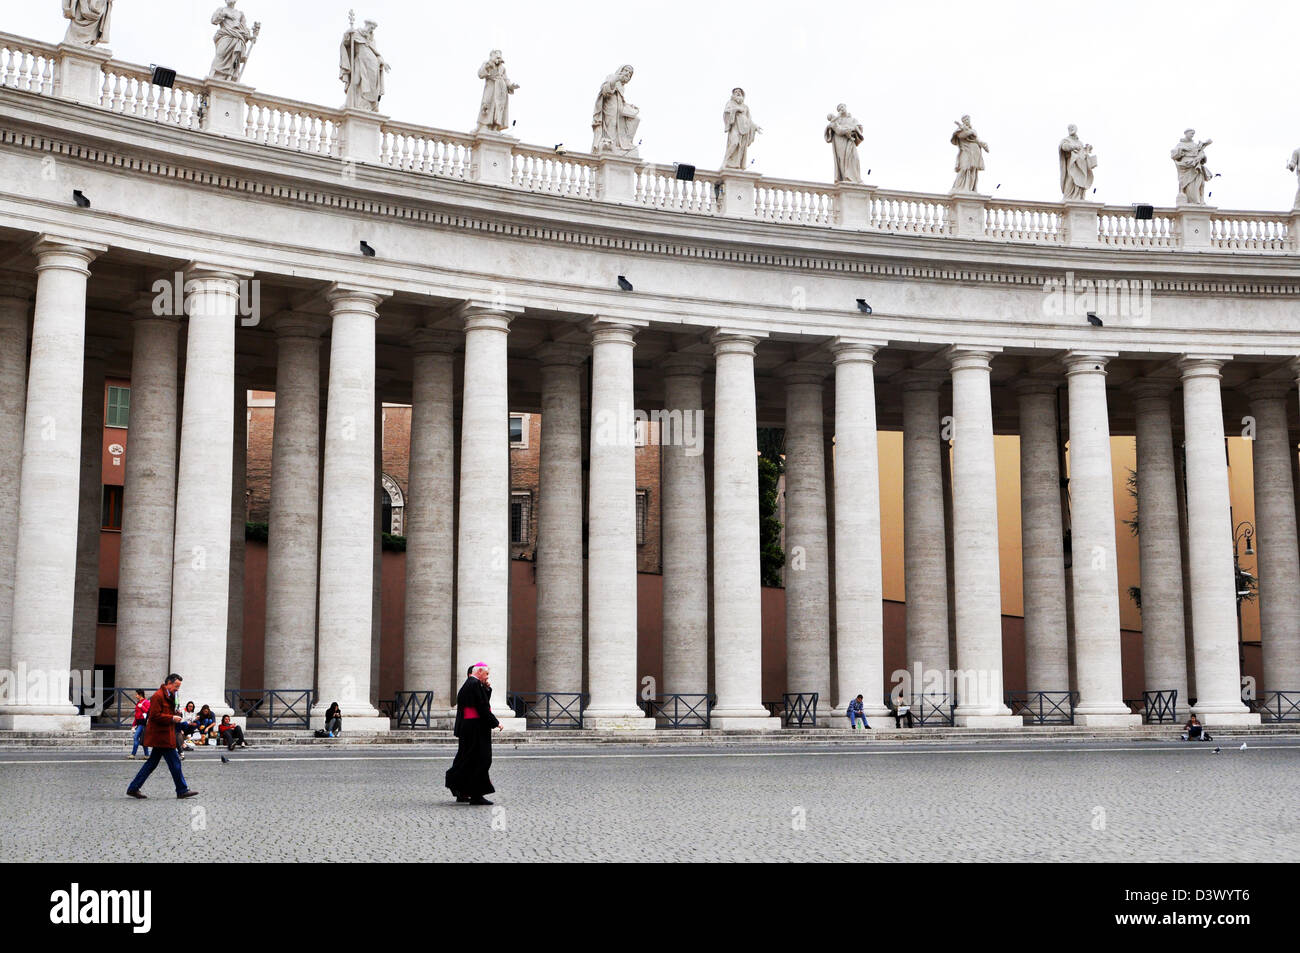 Las columnas romanas, la Plaza de San Pedro, Ciudad del Vaticano, Roma, Italia Foto de stock